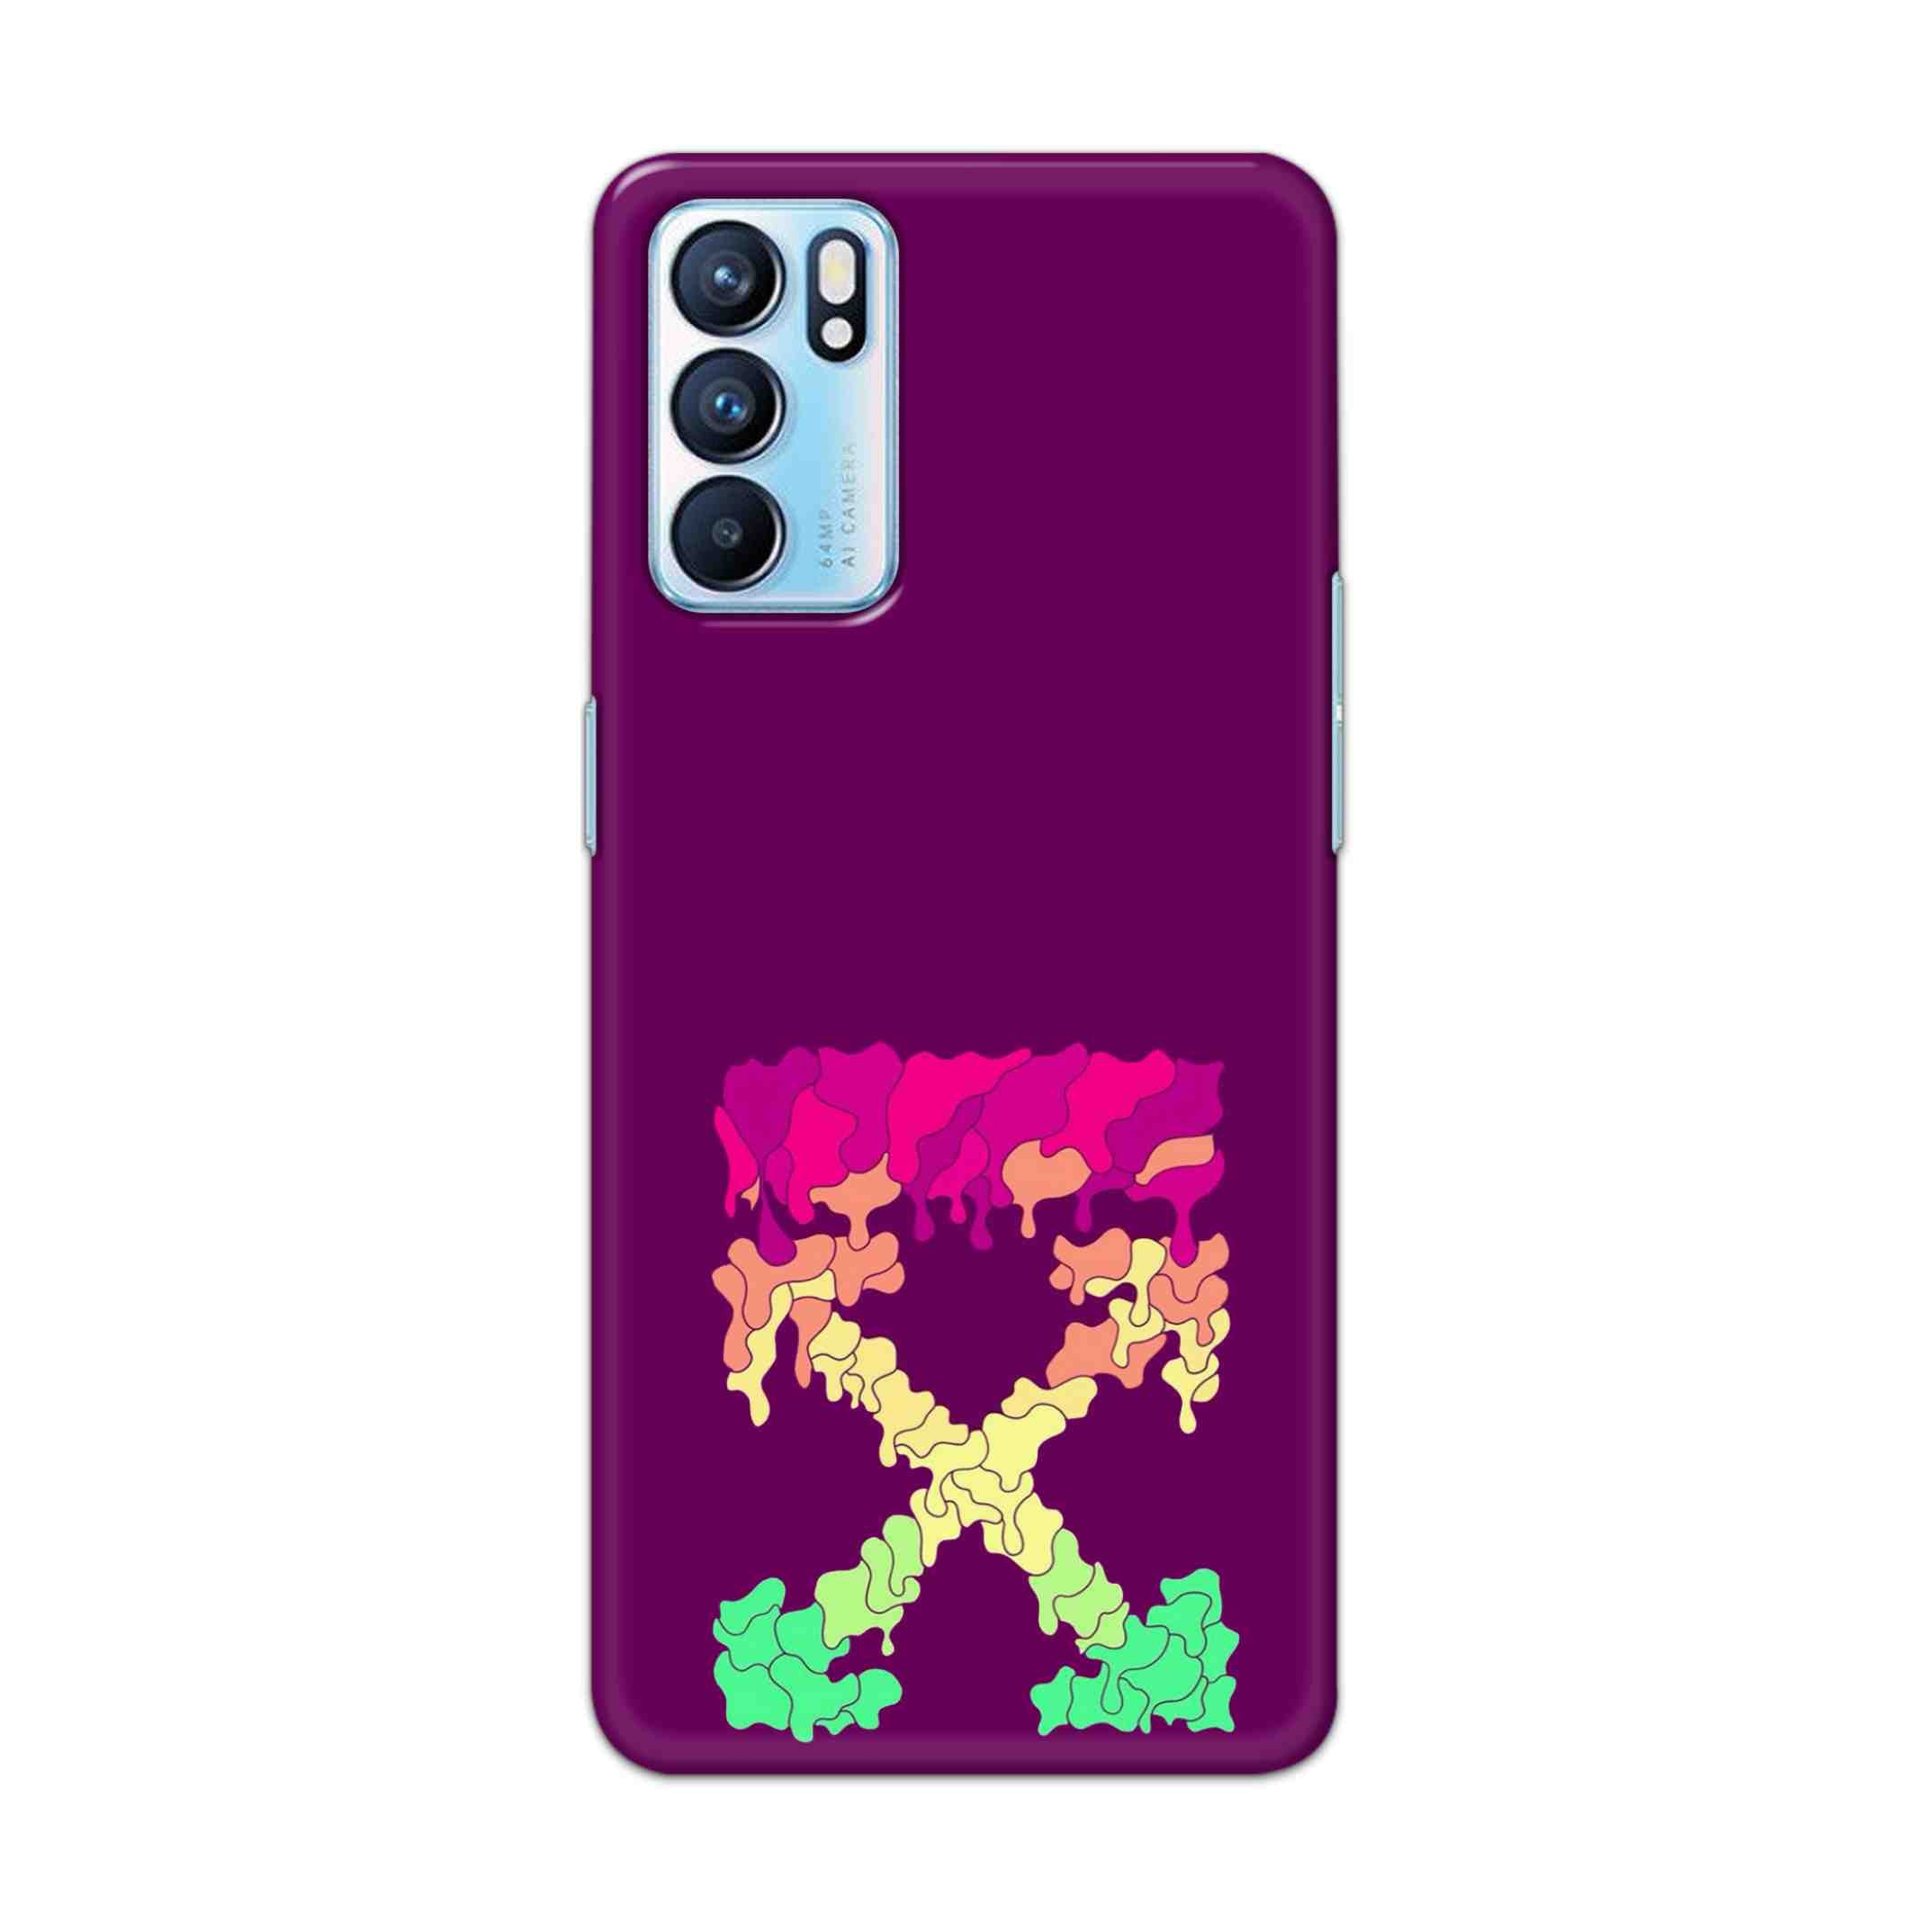 Buy X.O Hard Back Mobile Phone Case Cover For OPPO RENO 6 Online